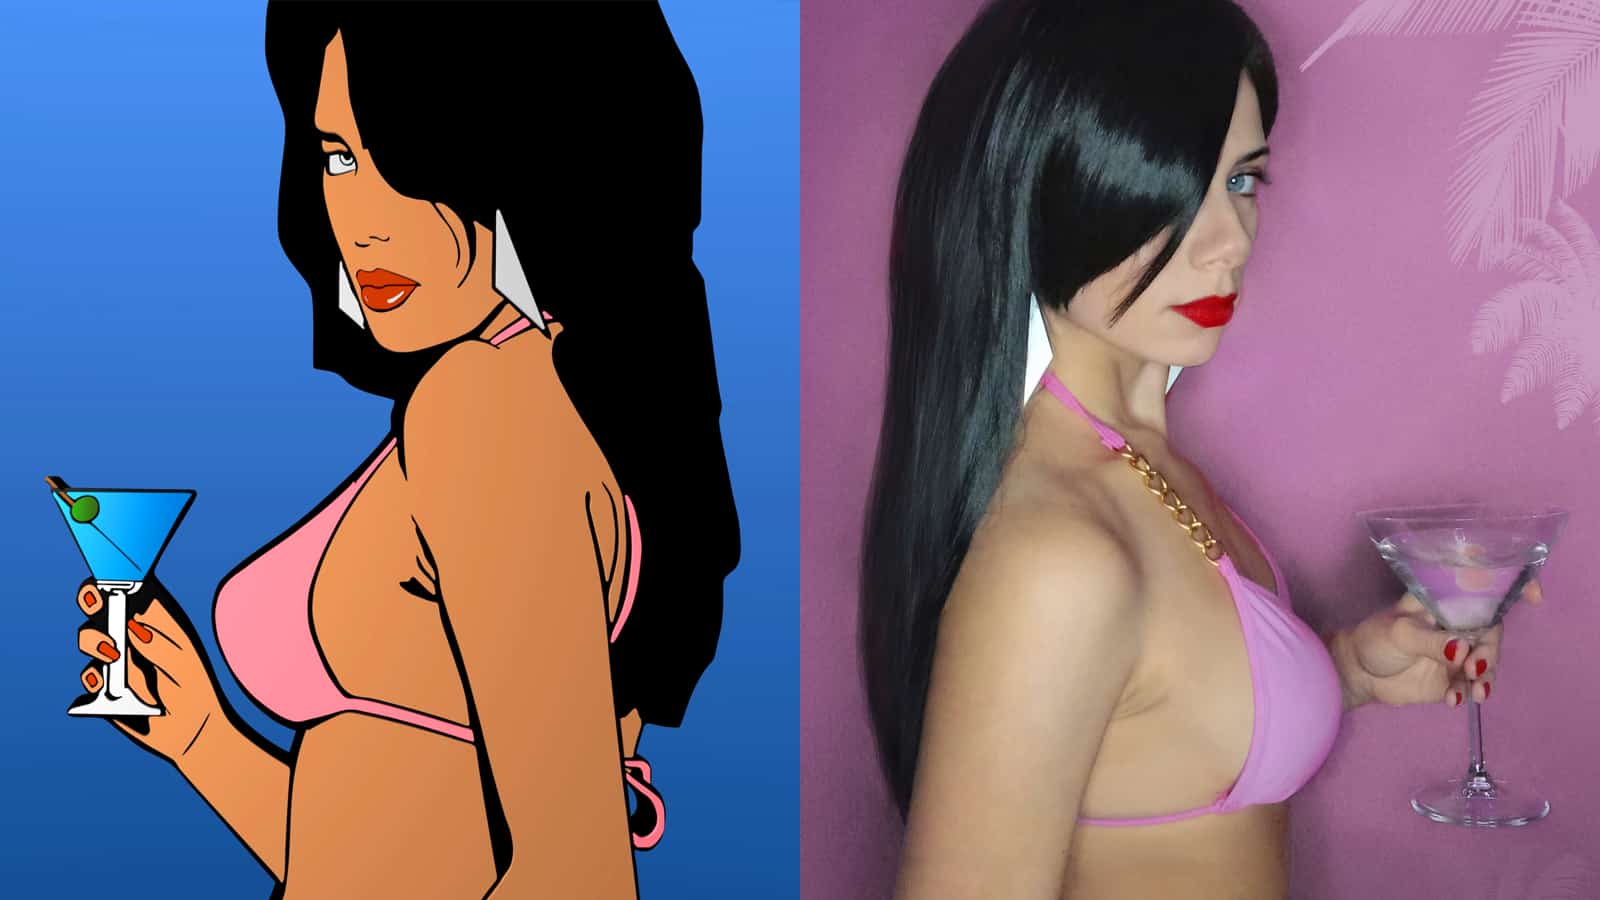 an image of GTA Vice City bikini girl next to cosplay Daria Gertsen.